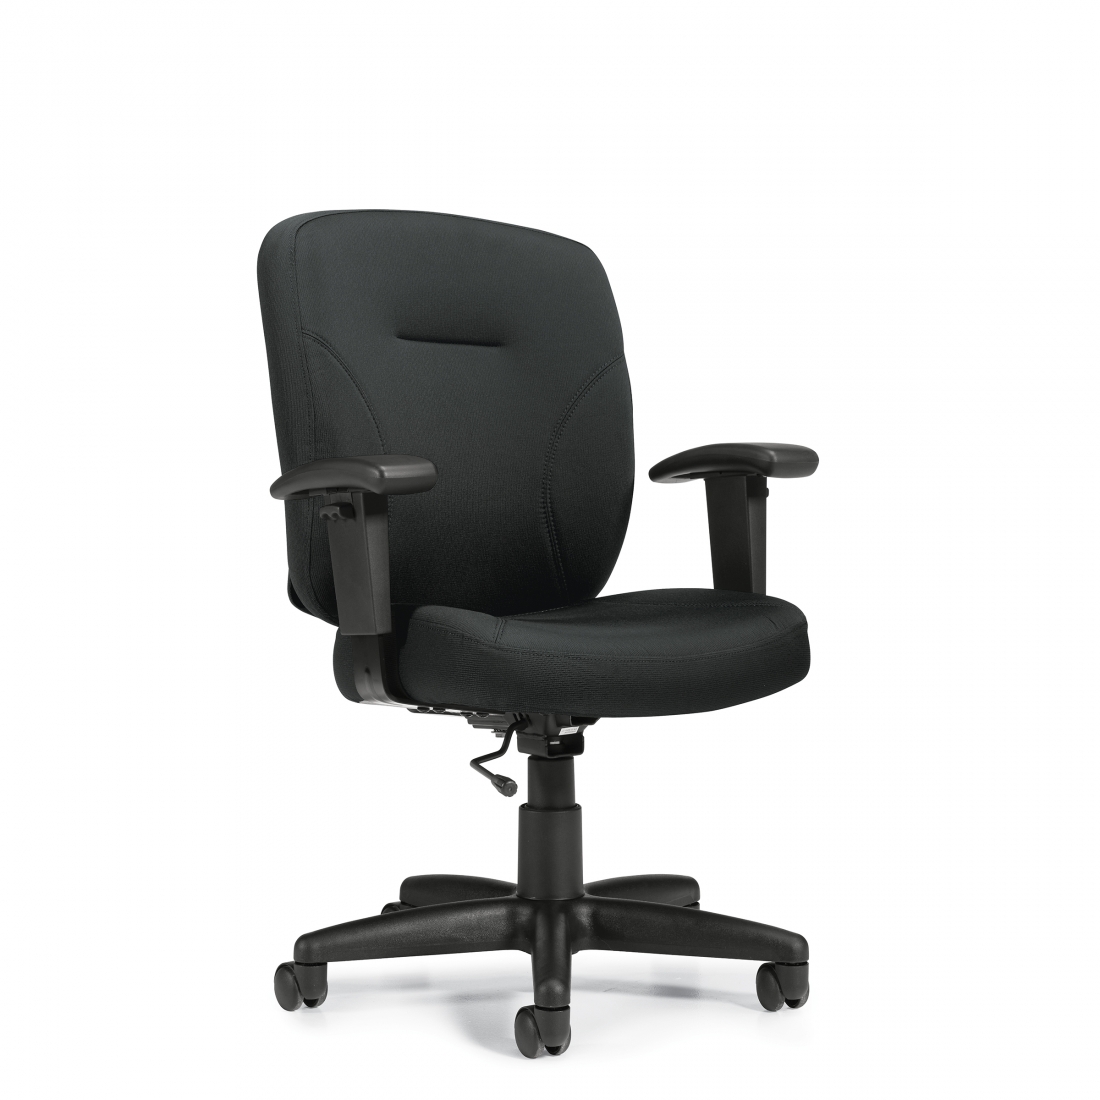 Office chair with mesh back – EFG Yoyo